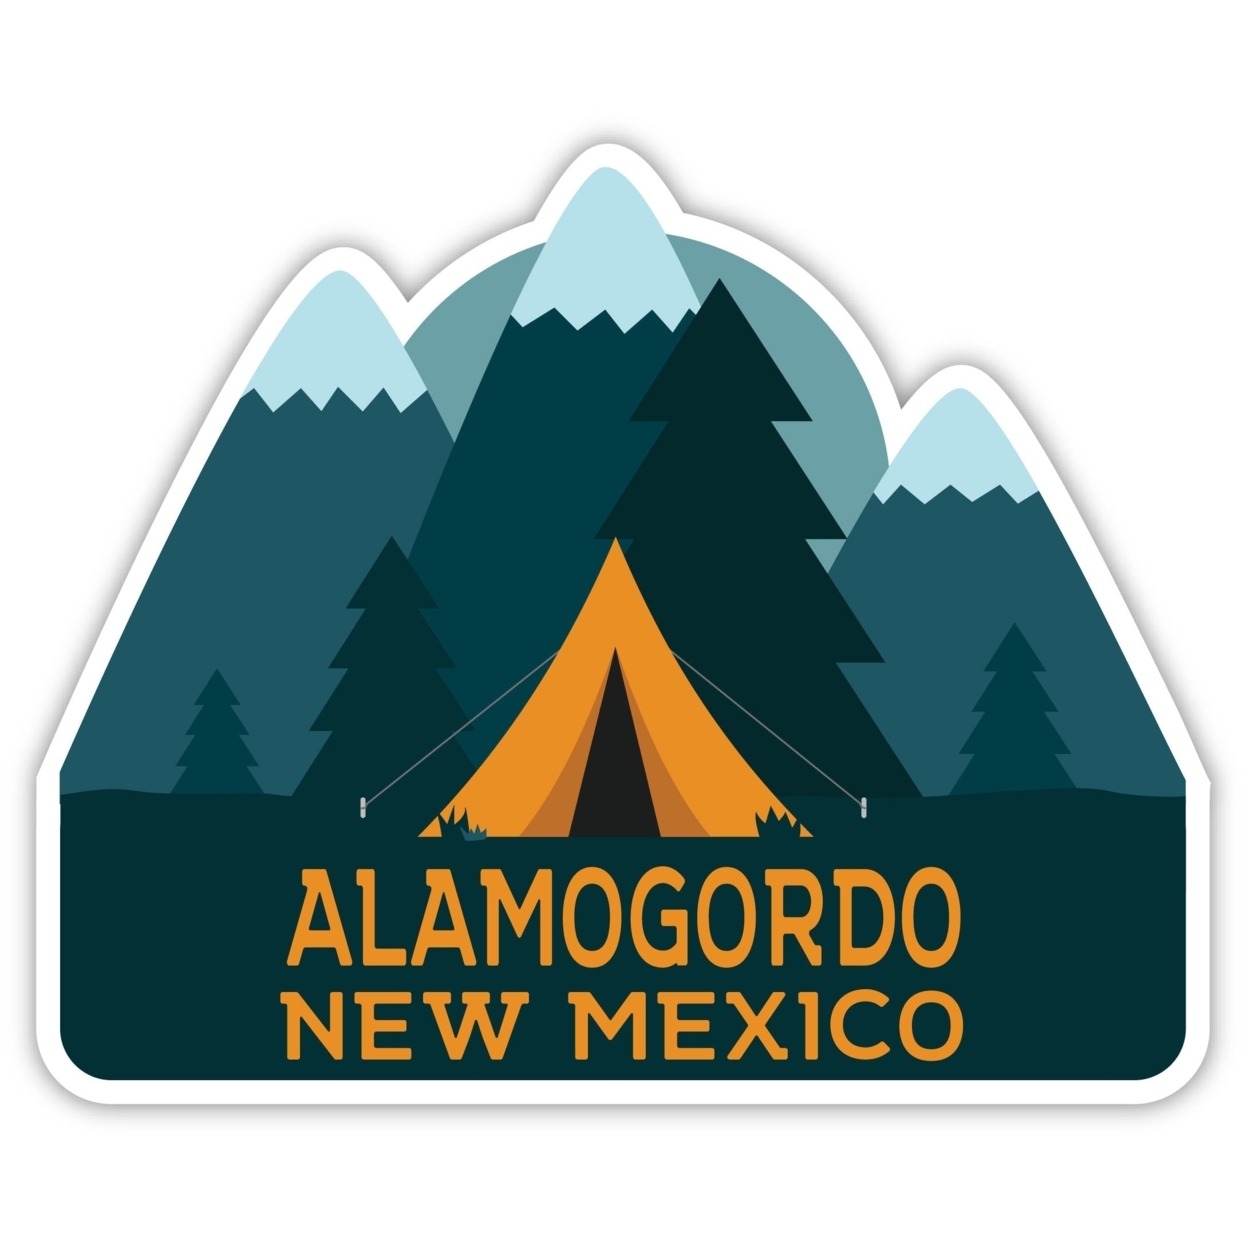 Alamogordo New Mexico Souvenir Decorative Stickers (Choose Theme And Size) - Single Unit, 6-Inch, Camp Life